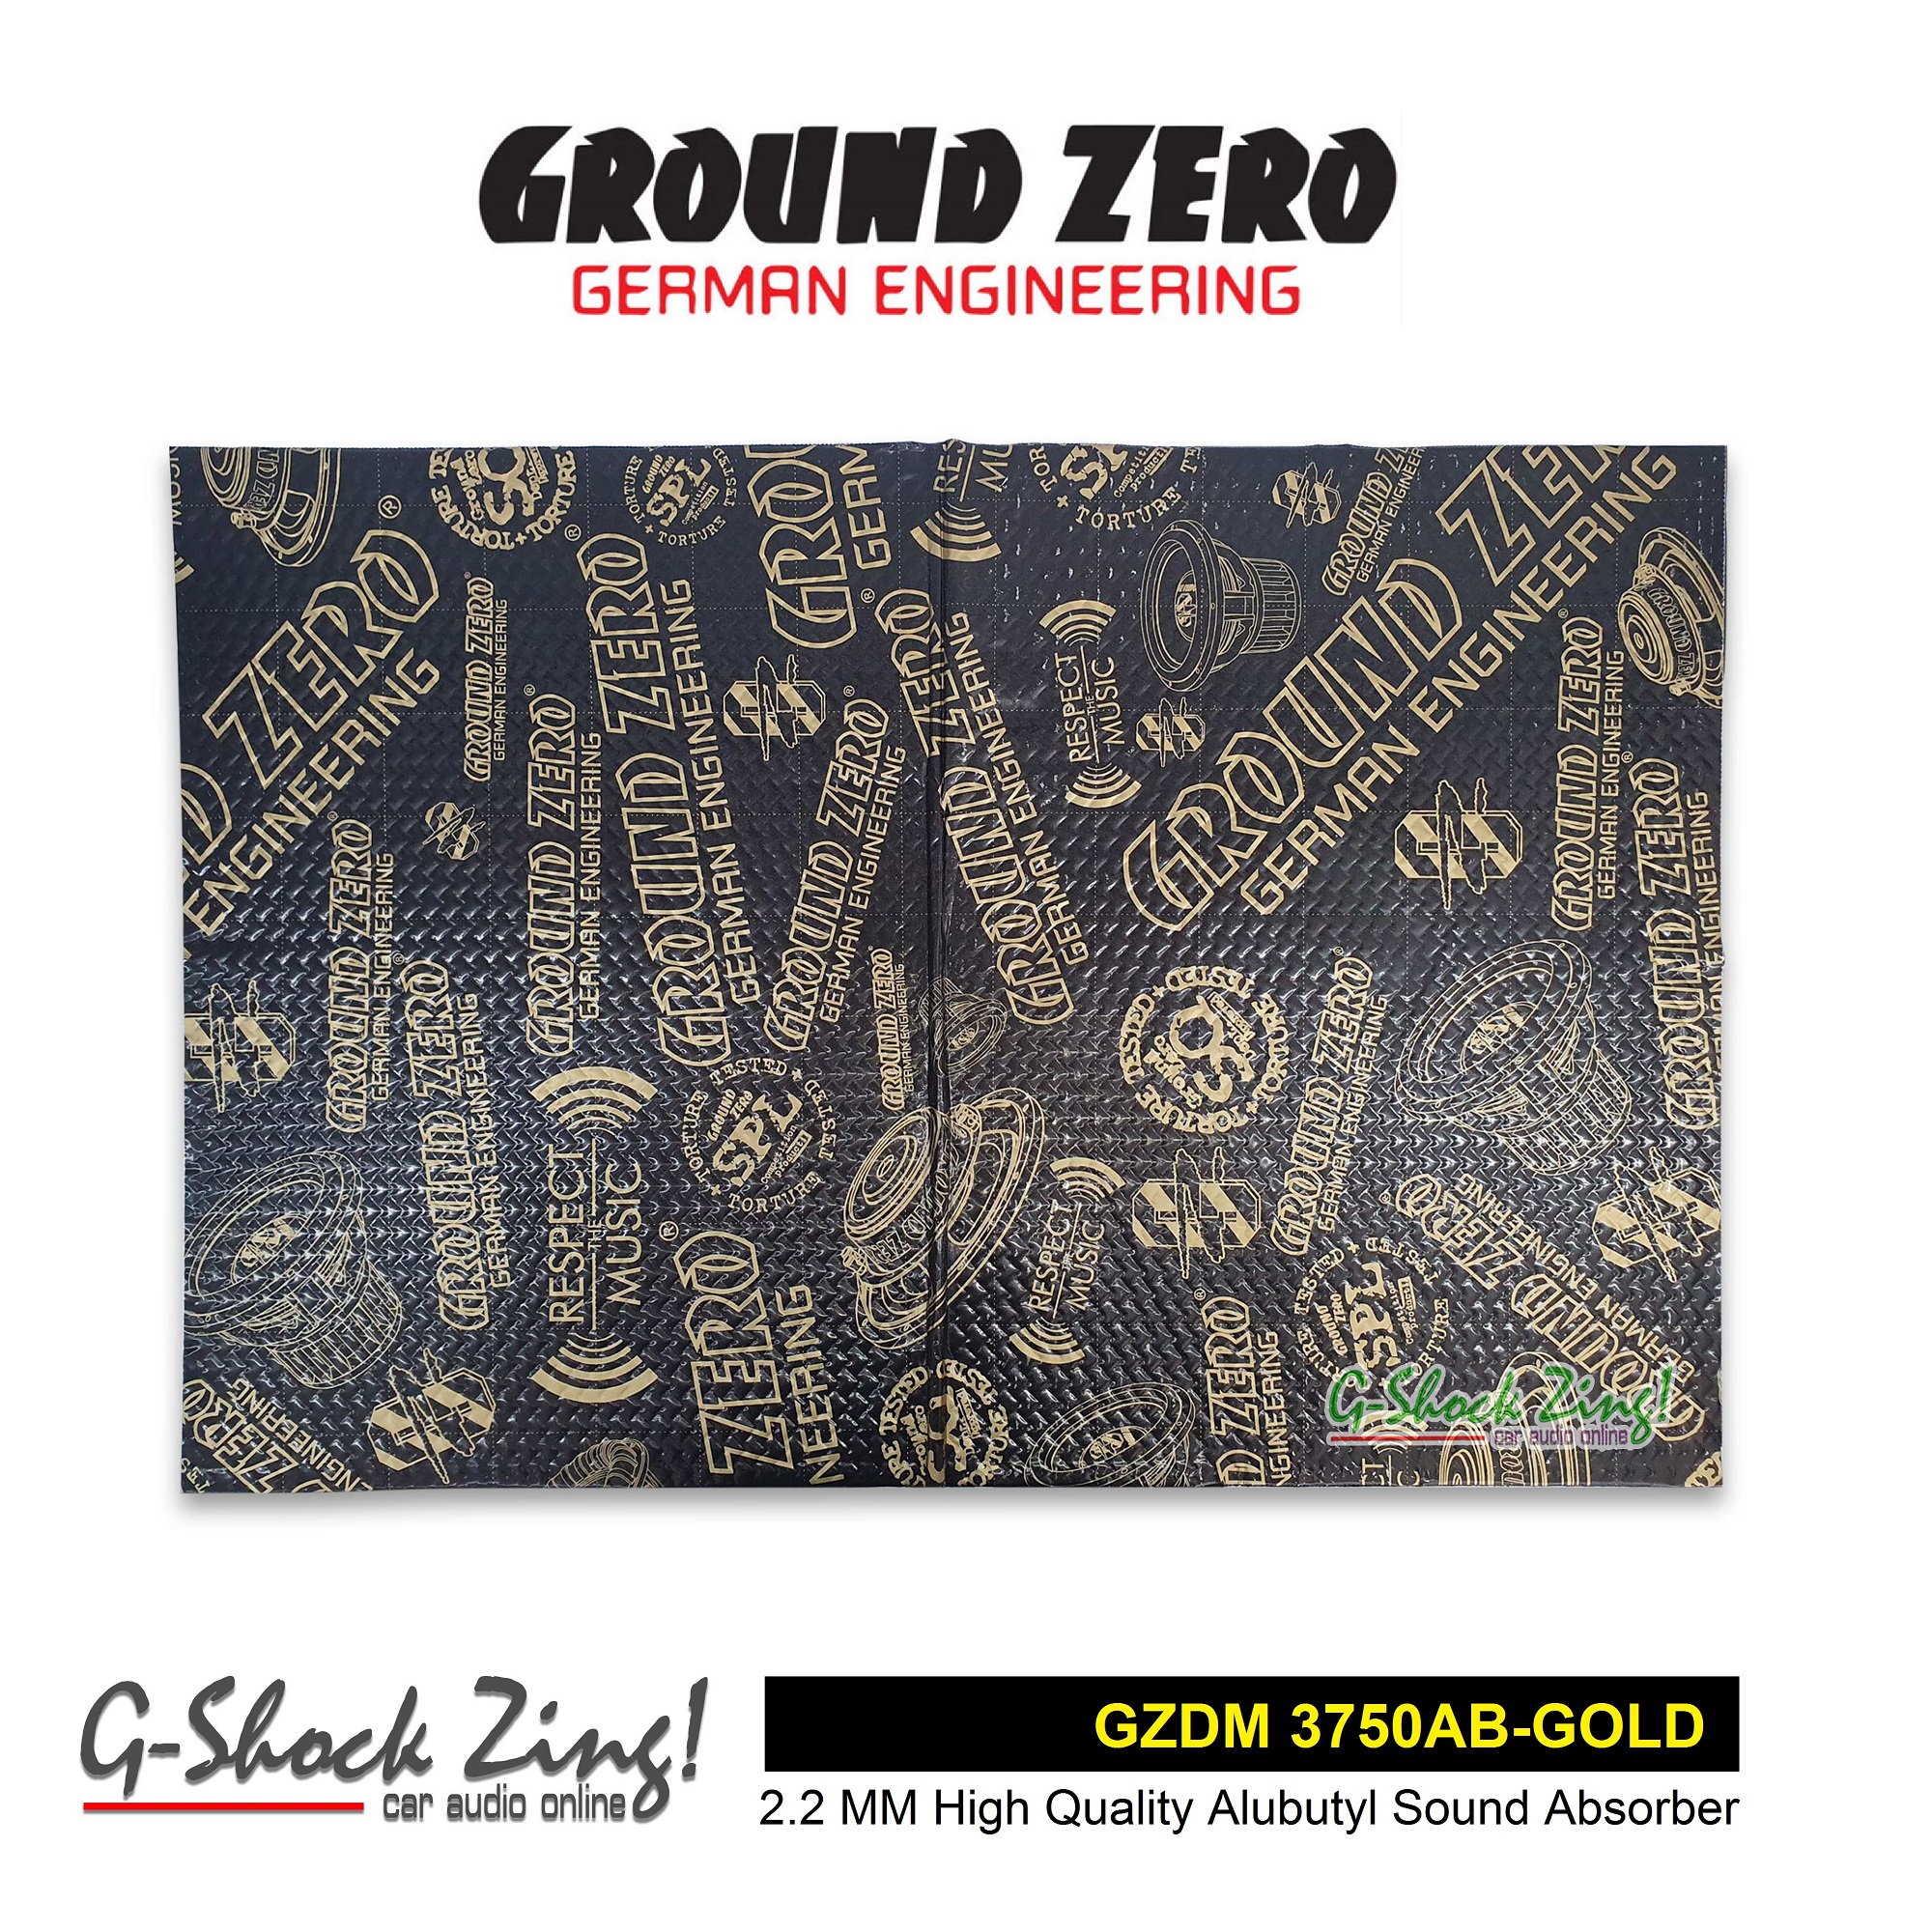 GROUND ZERO Sound Damping Premium แผ่นแดมป์ แบบฟอยล์(ยางดำ) คุณภาพสูงเกรดพรีเมี่ยม ติดช่วยลดการสั่น เก็บเสียง (ขนาด 75cm.x50cm).ซม หนา2.2มิล GROUND ZERO รุ่น GZDM 3750AB-GOLD=1แผ่น.